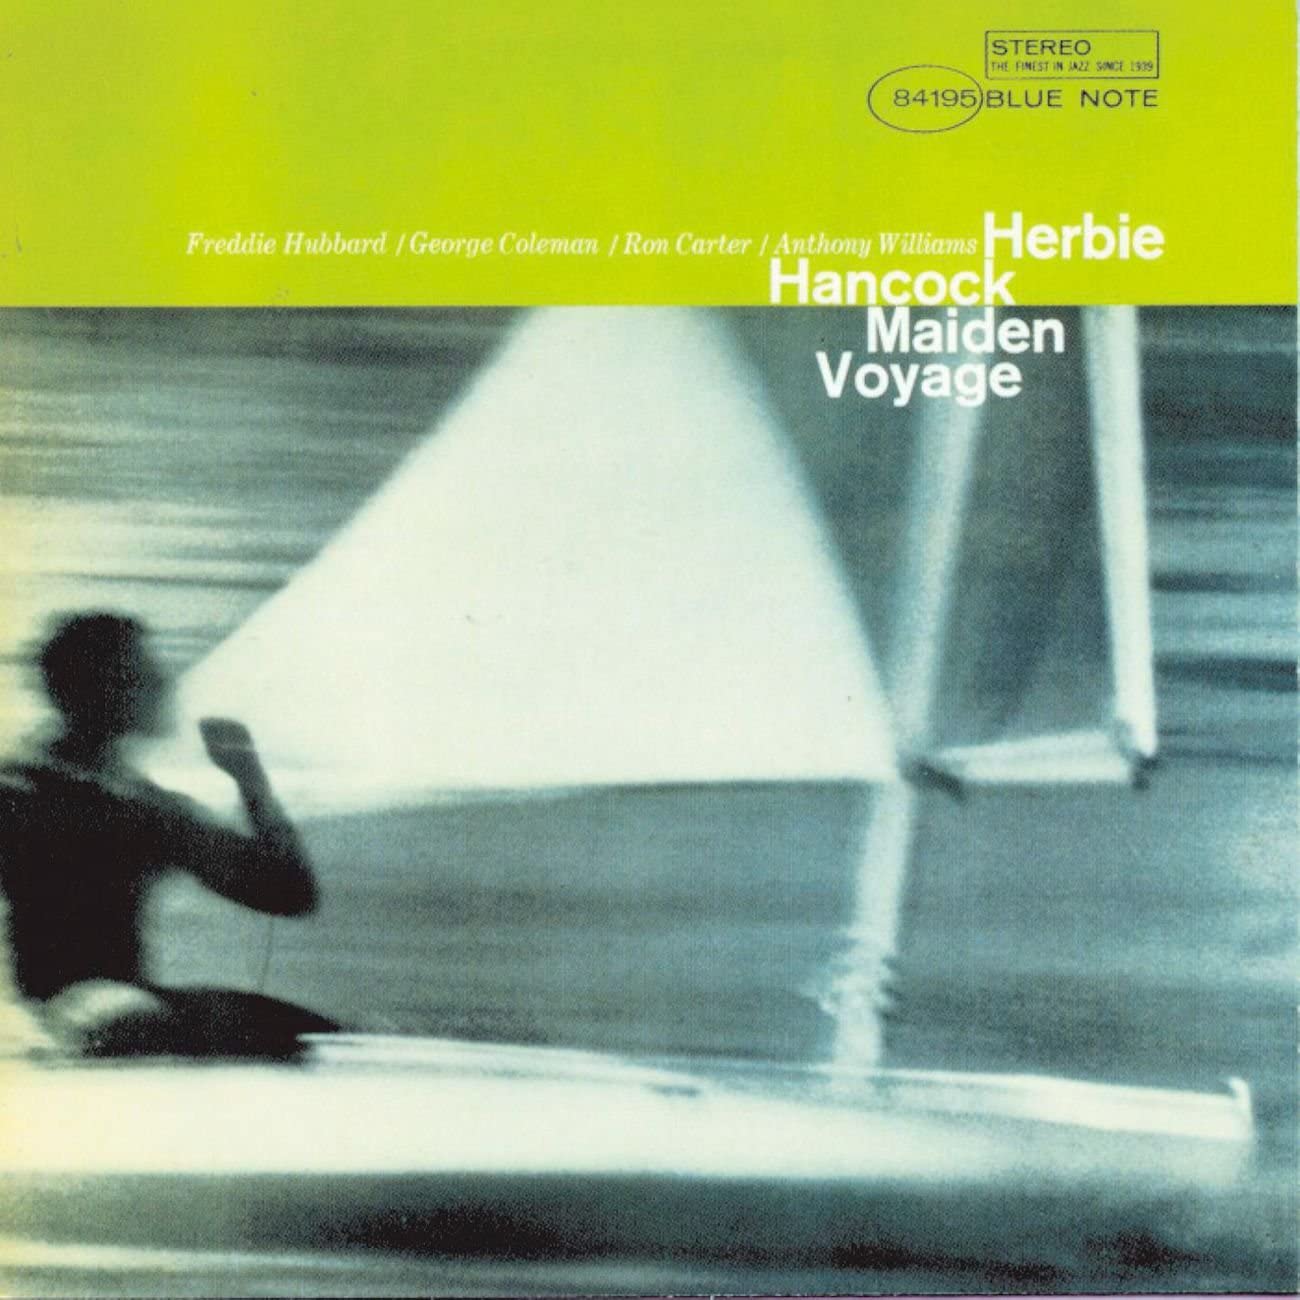 Herbie Hancock - Maiden Voyage 24-192